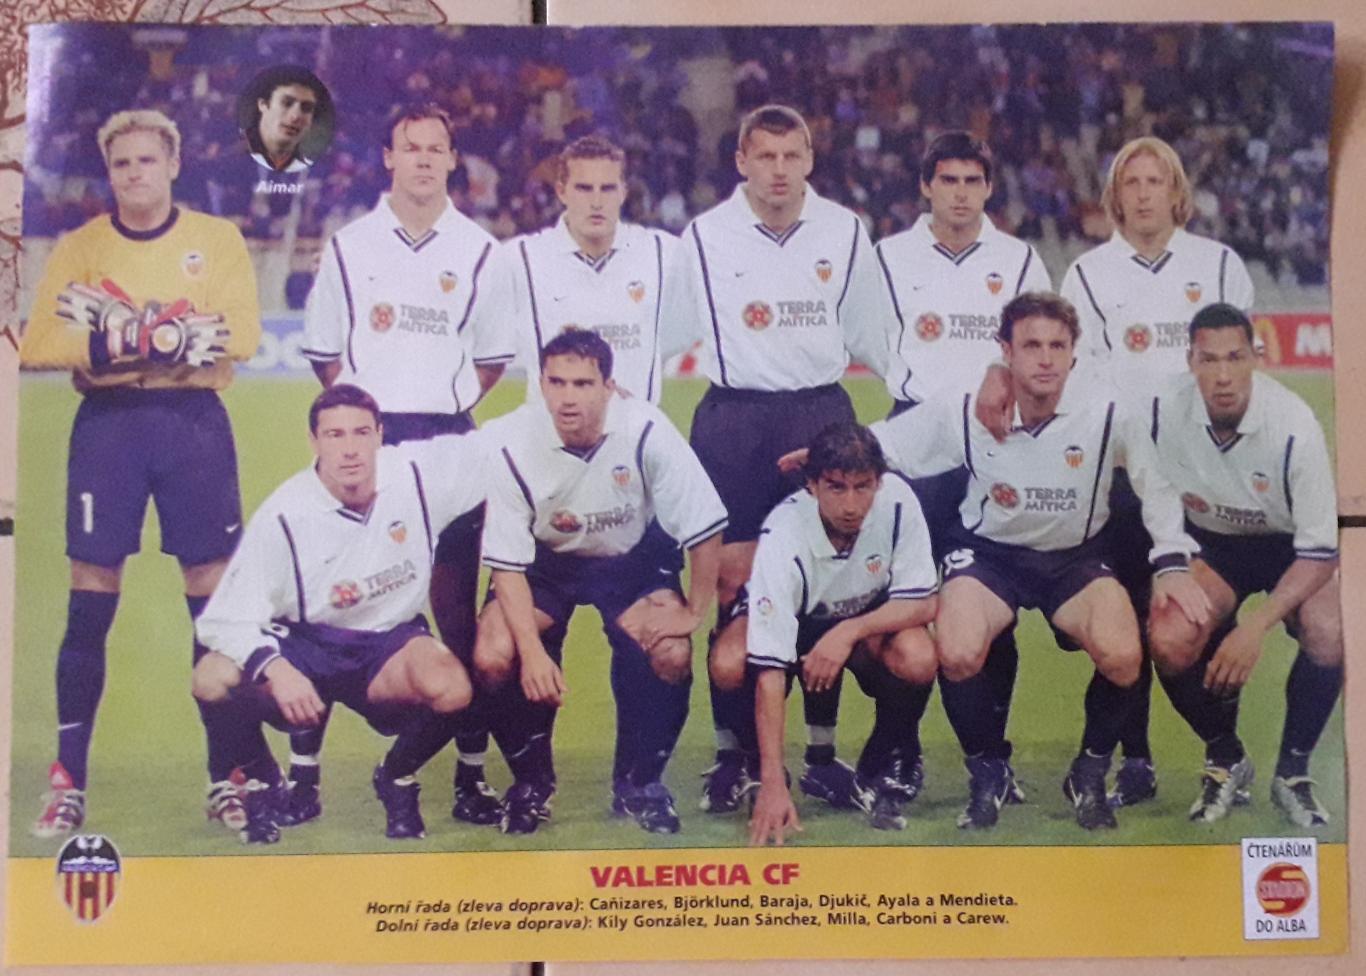 Valencia CF. Плакат формата А4 из журнала Stadion.